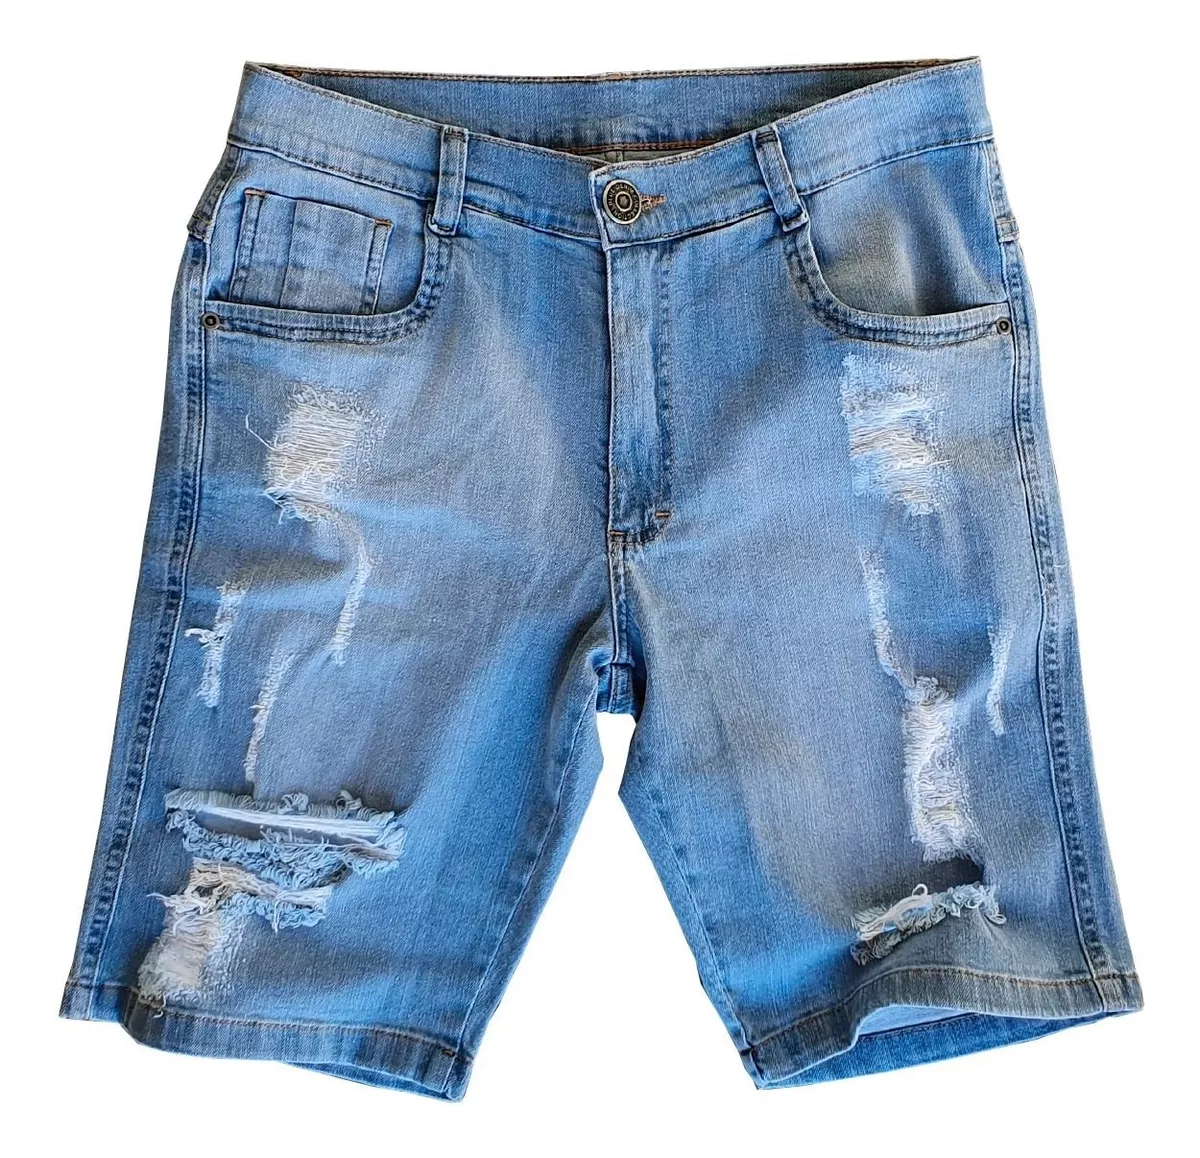 Vcstilo Bermuda Jeans Masculina Rasgado Destroyed Com Elastano S07 R 84 00